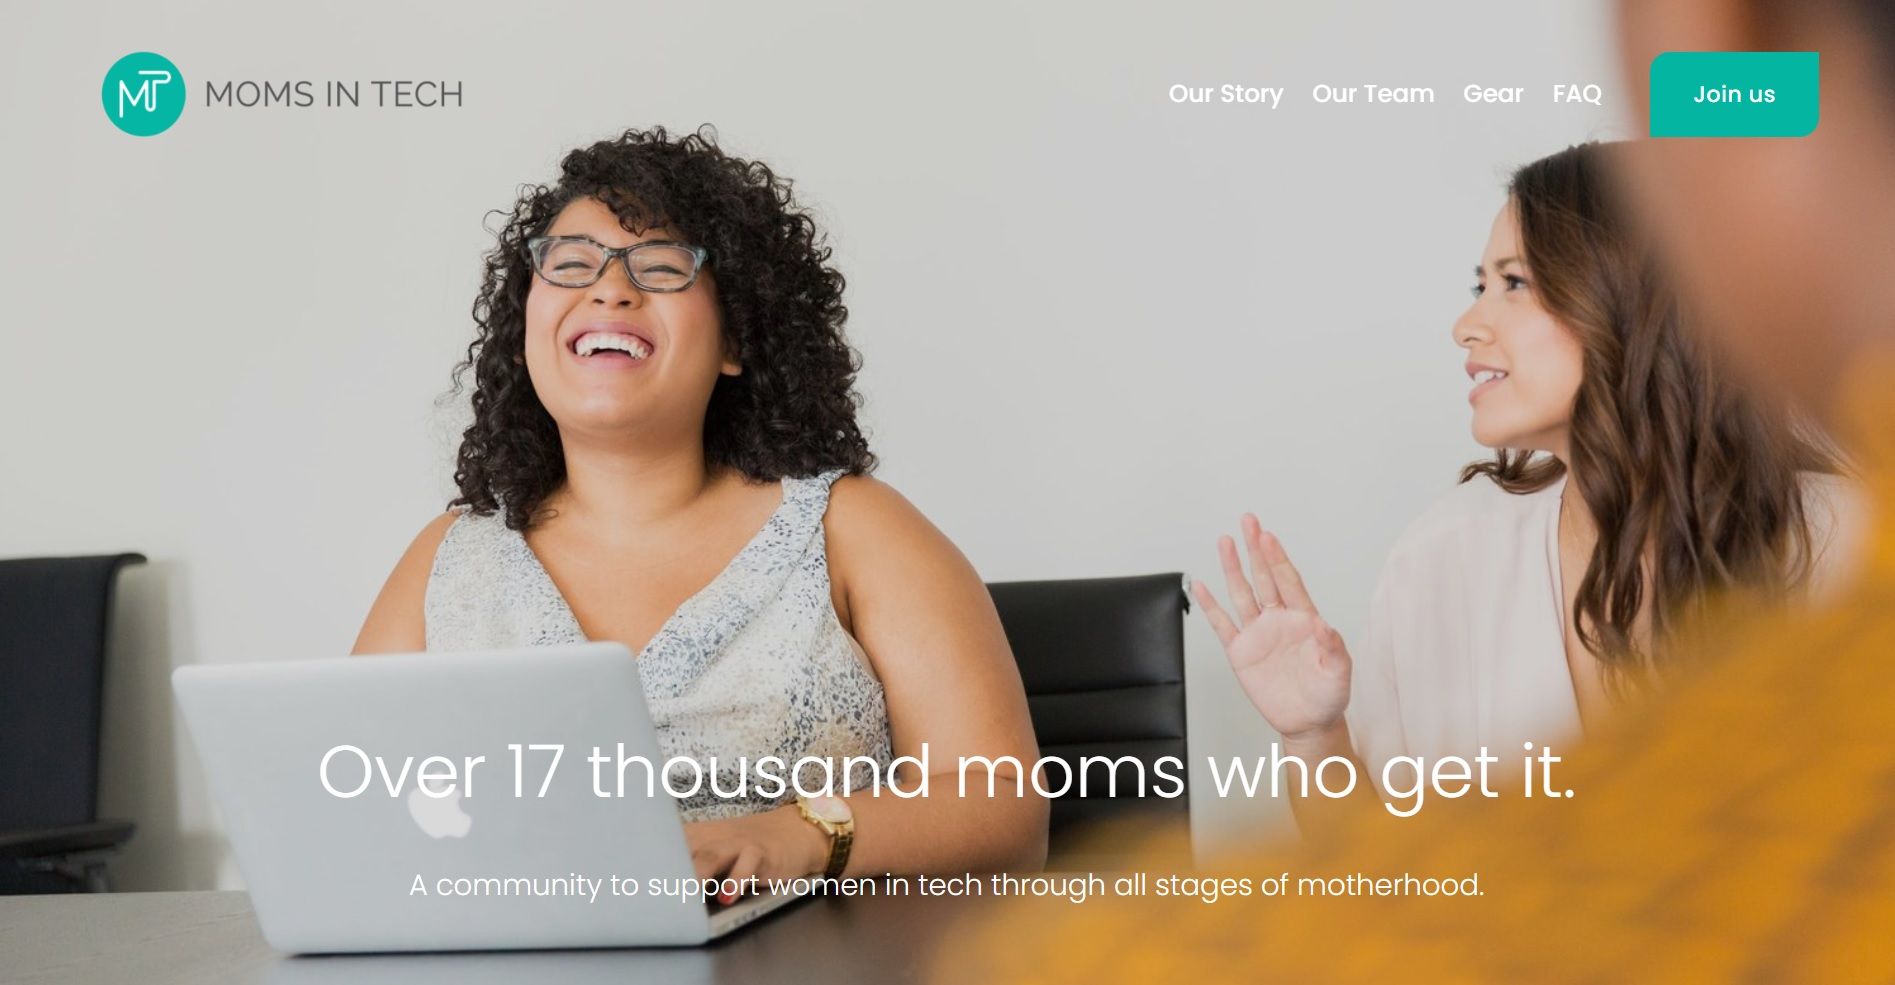 Página inicial do Moms in Tech